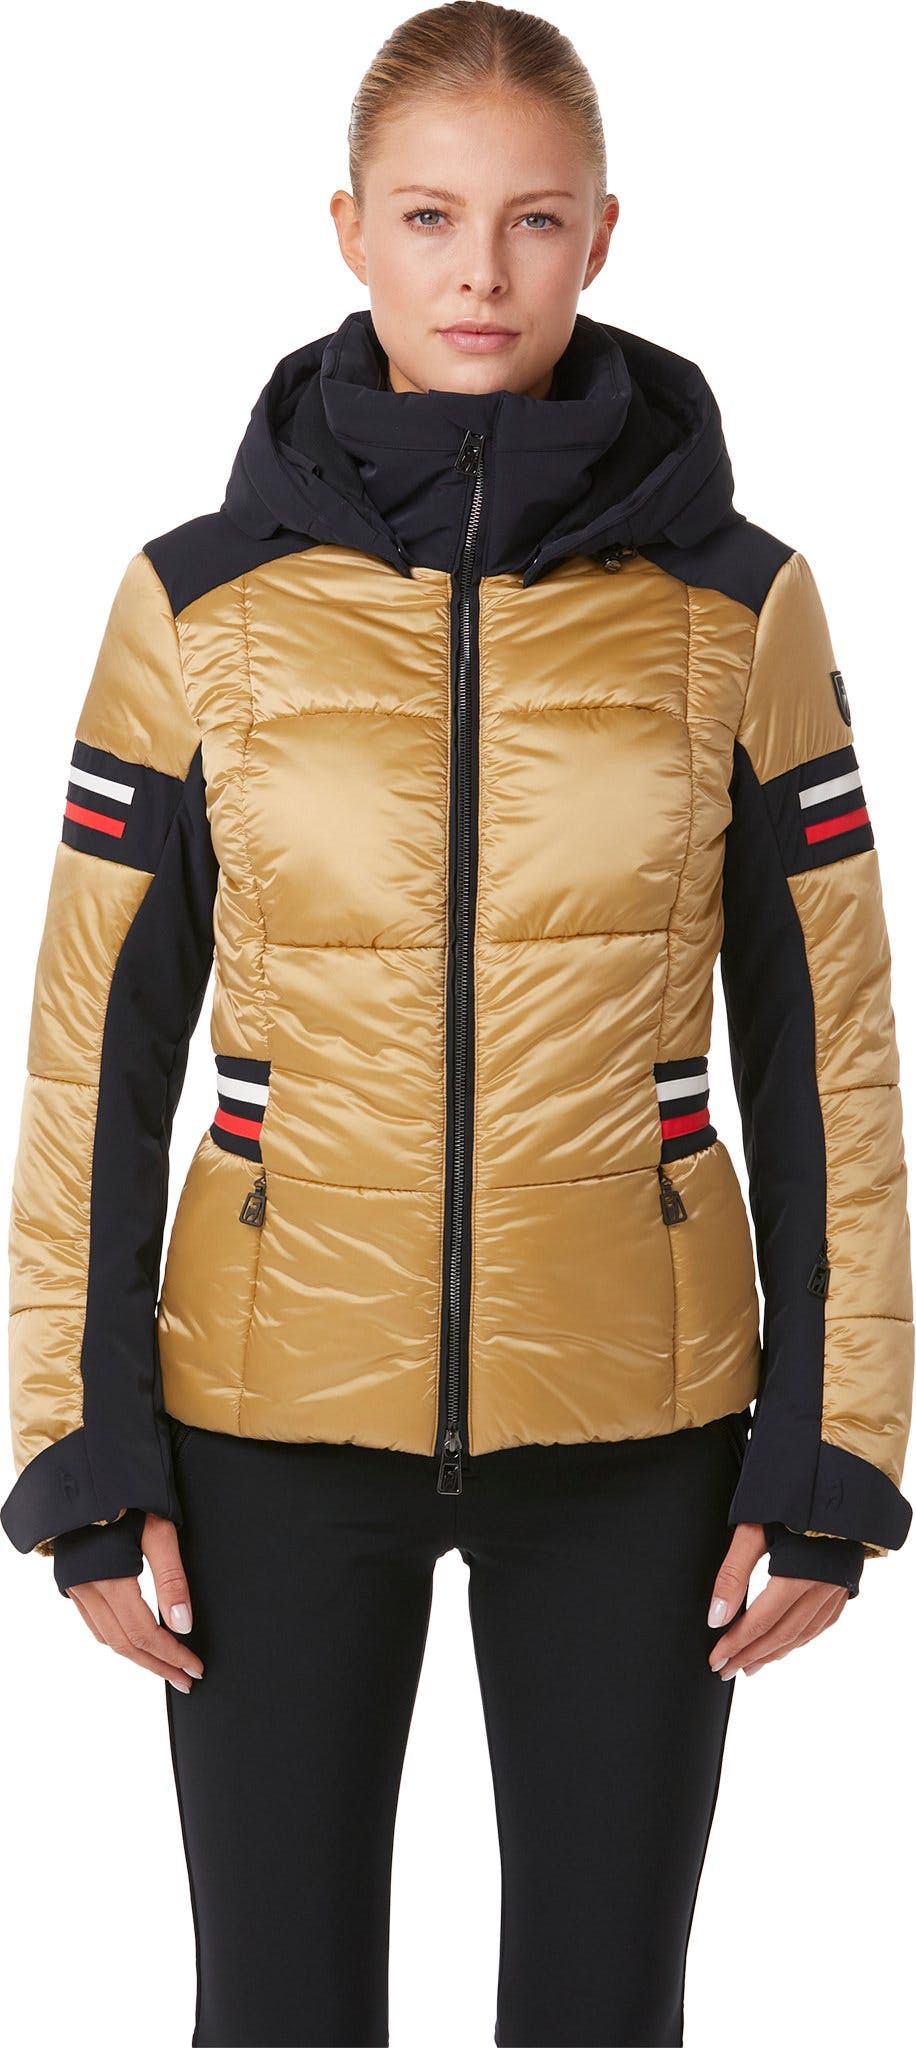 Product gallery image number 3 for product Nana Splendid Ski Jacket - Women's